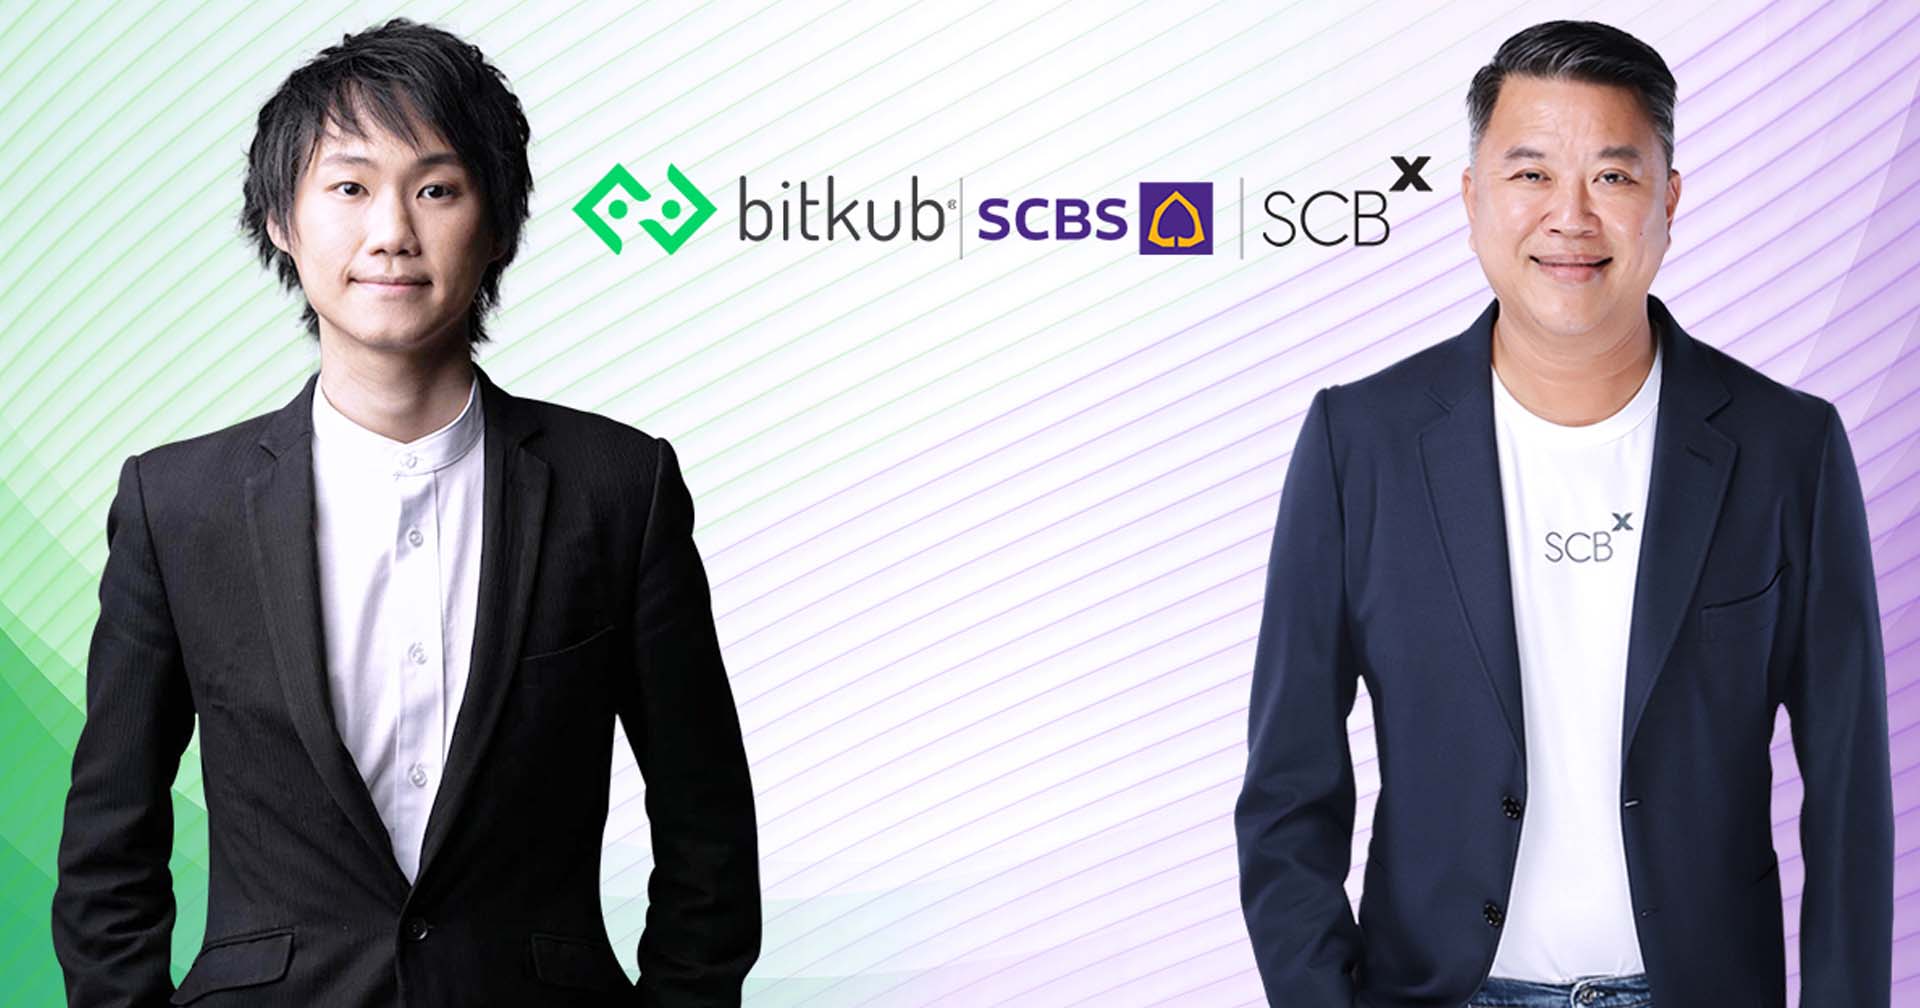 SCBX เผยความคืบหน้าการเข้าซื้อหุ้น Bitkub อยู่ในการสอบทานธุรกิจ ต้องขยายเวลาเพิ่ม